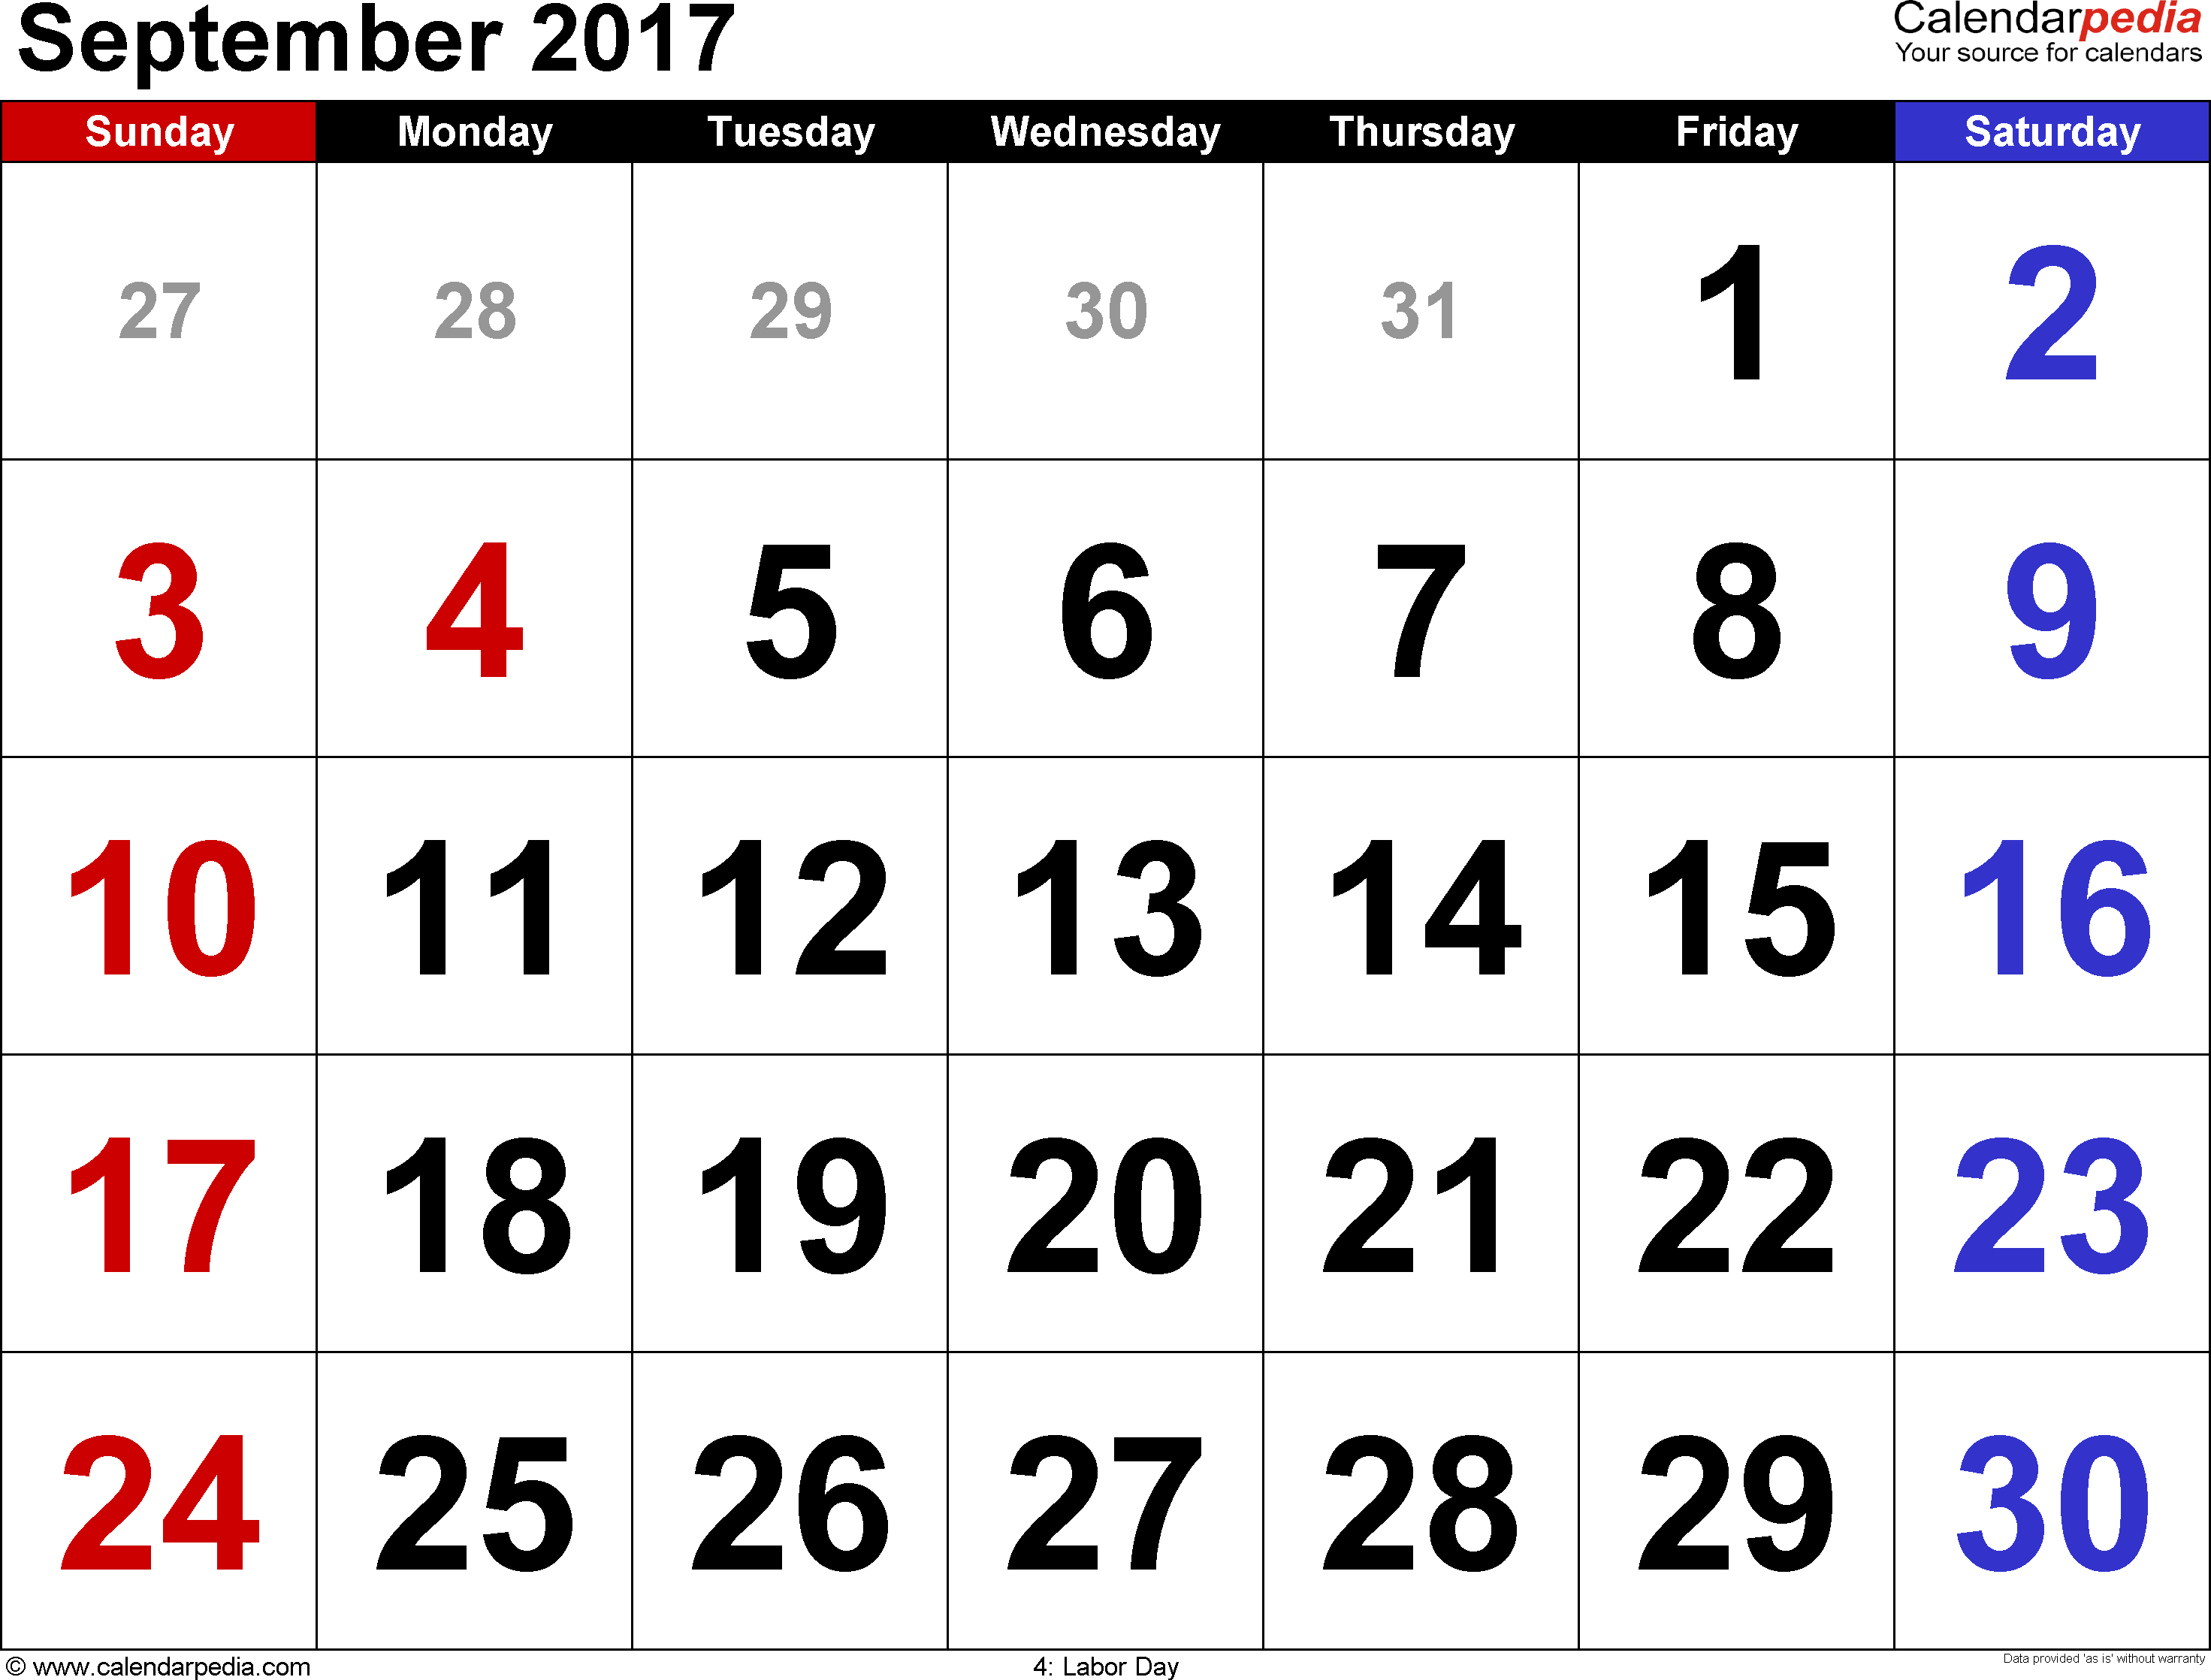 September 2017 Calendars for Word, Excel & PDF